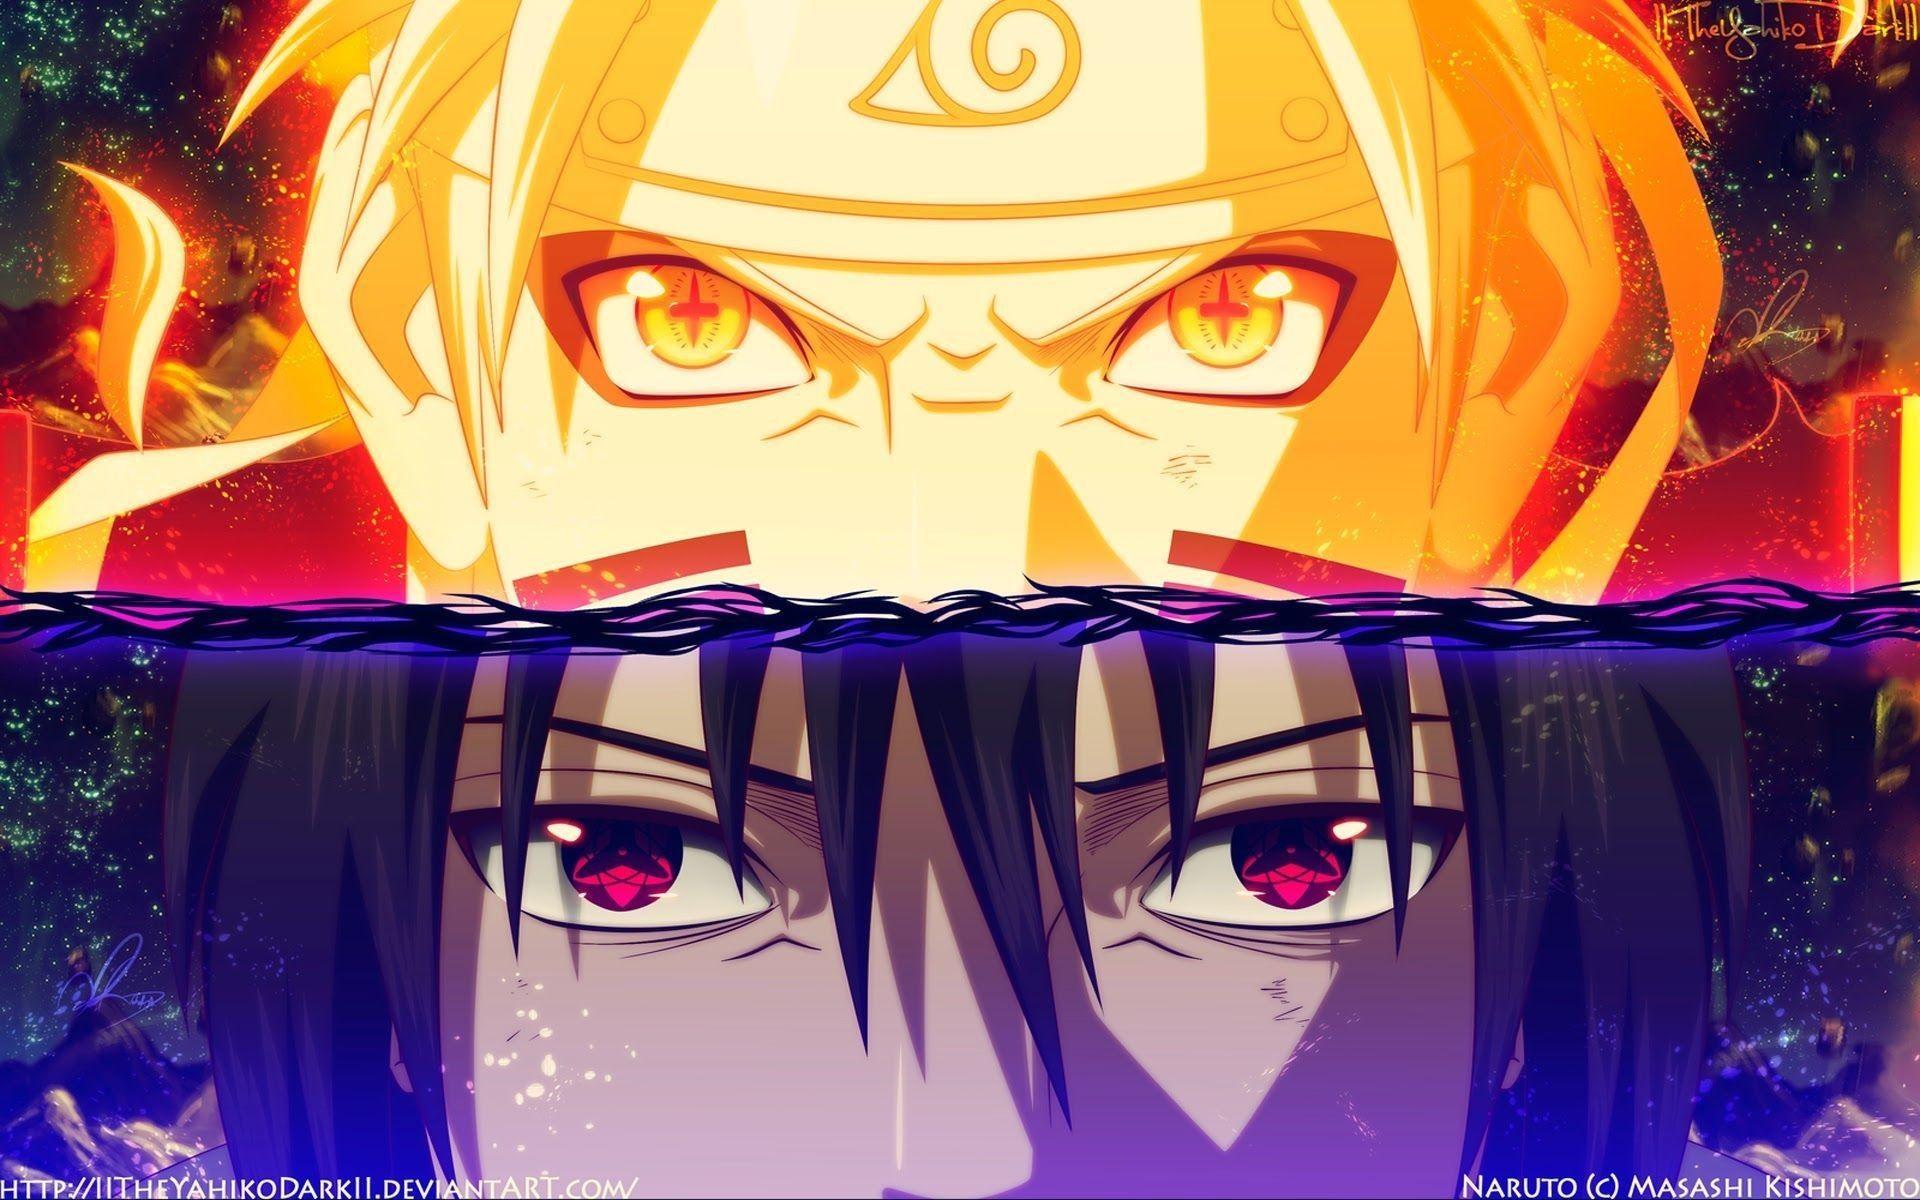 Naruto and Sasuke vs Madara Wallpaper